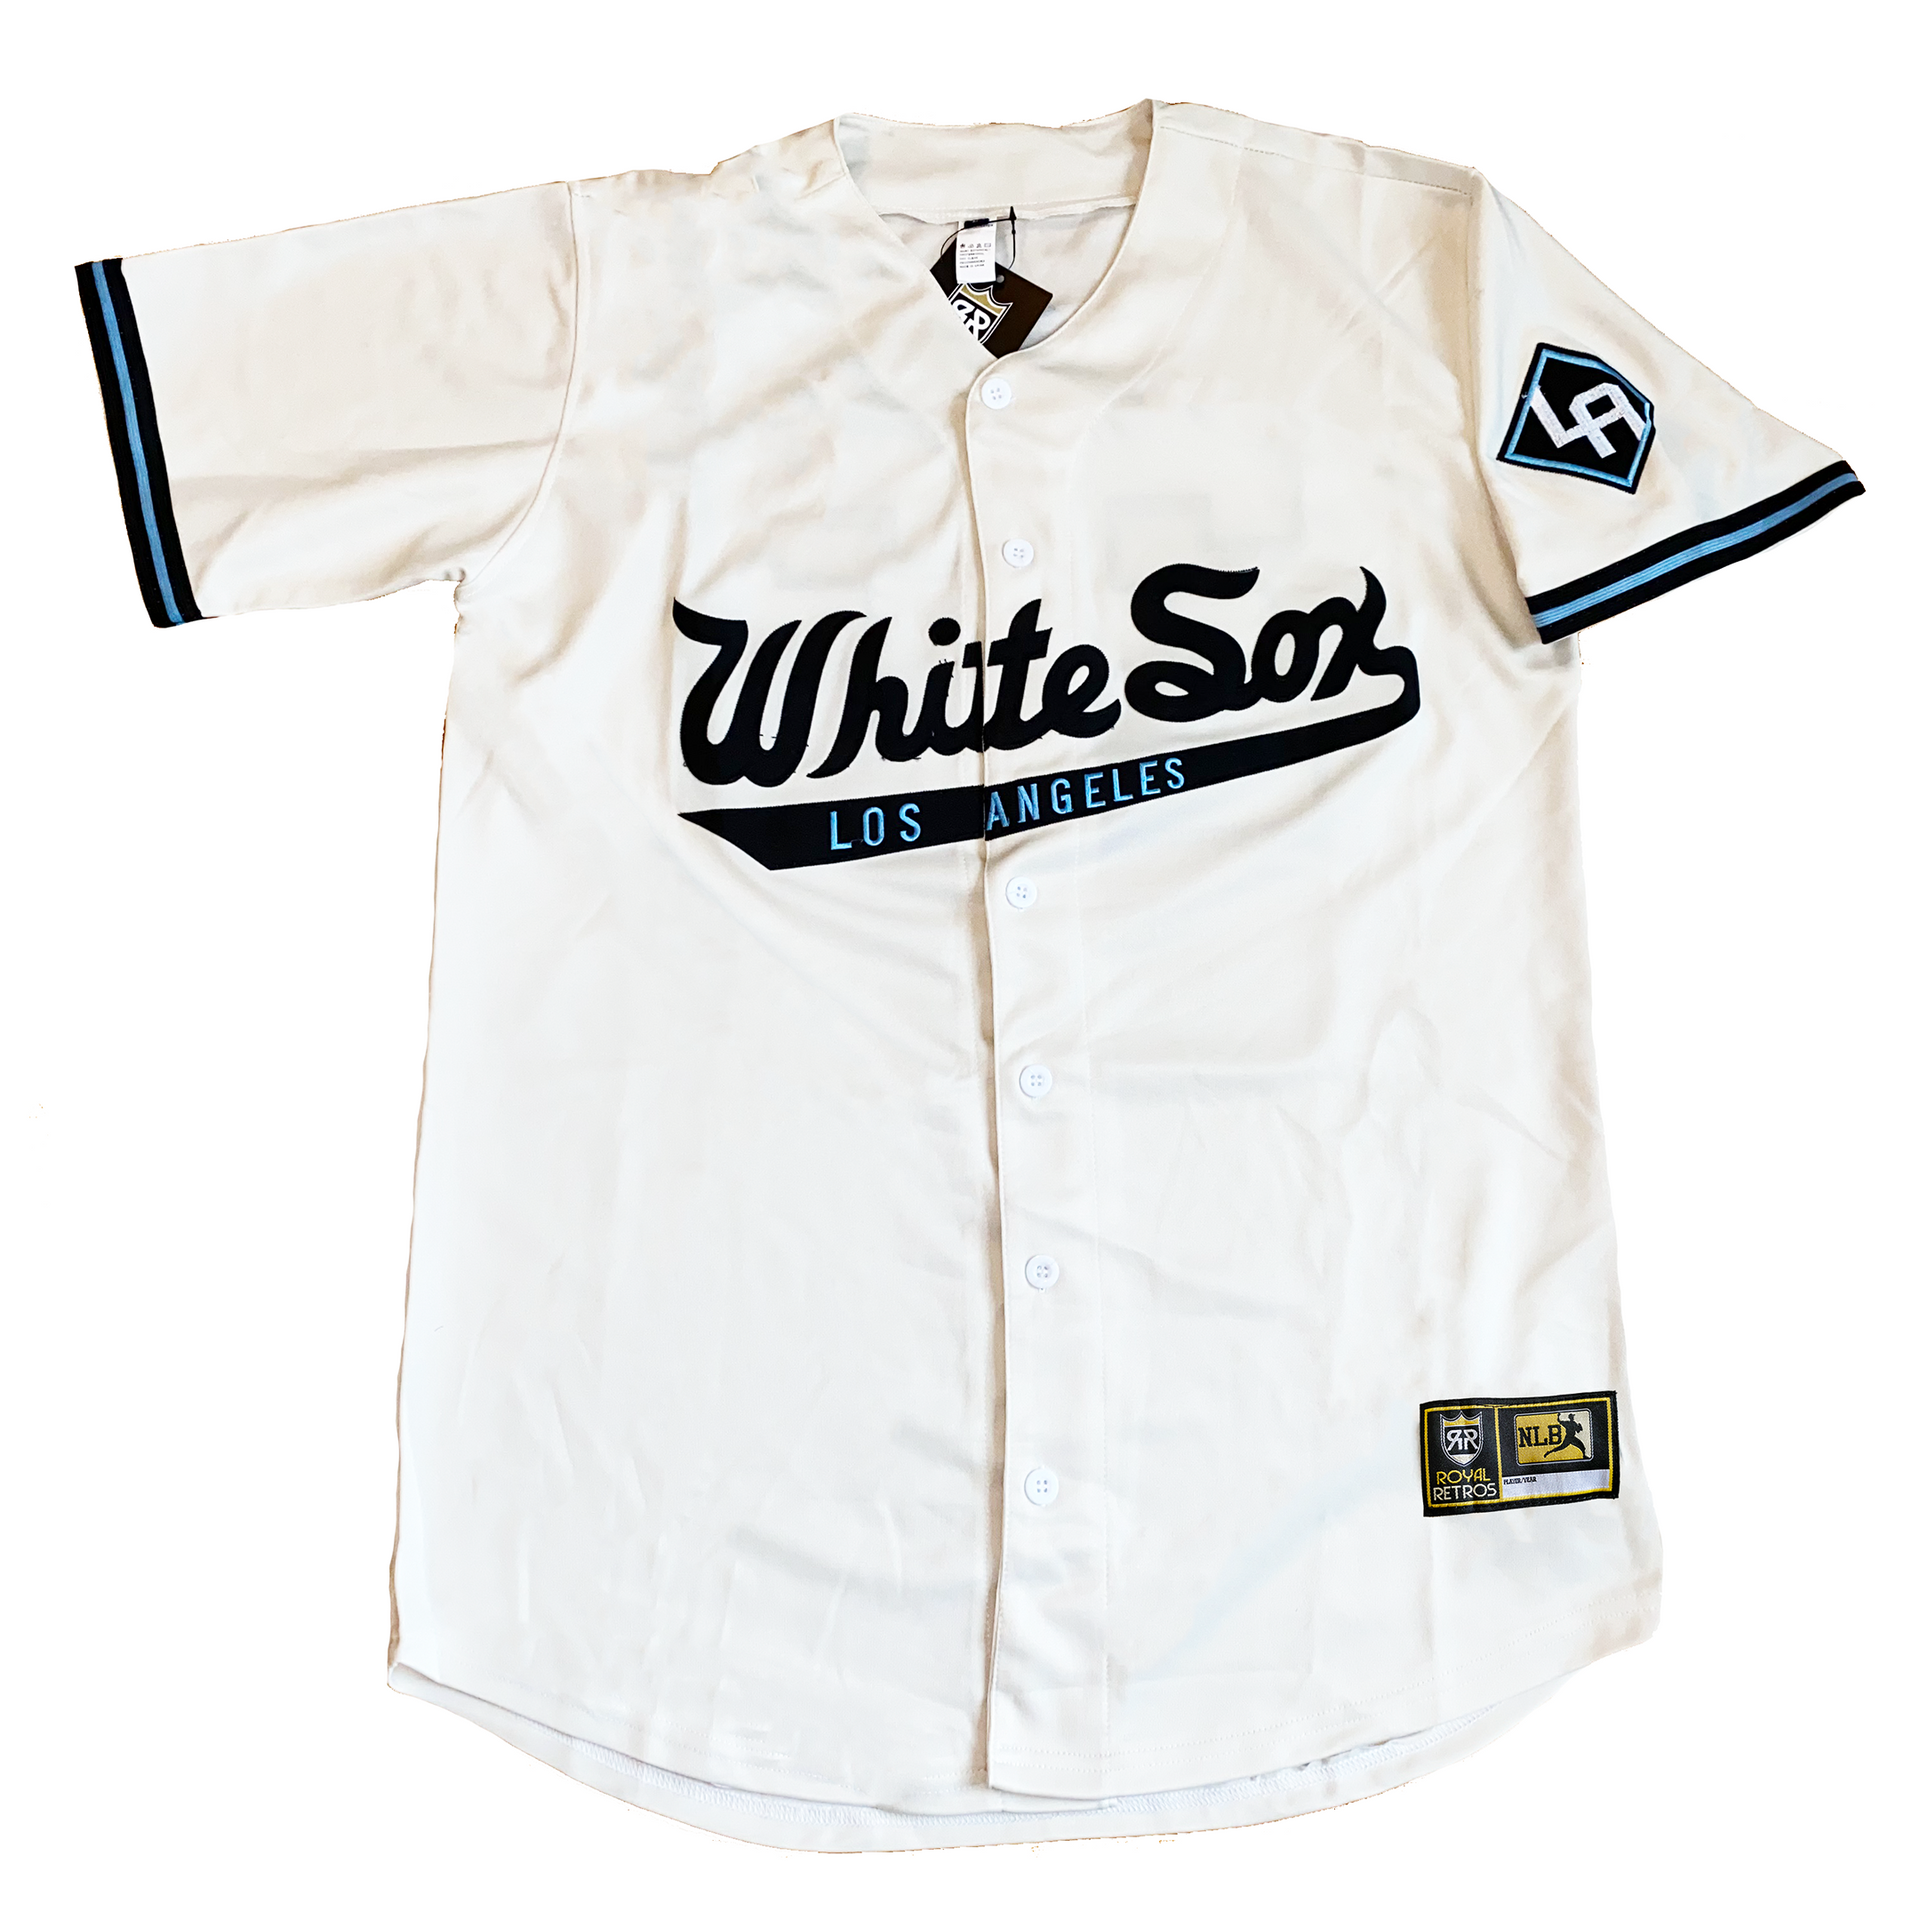 Chicago White Sox Baseball Jerseys, White Sox Jerseys, Authentic White Sox  Jersey